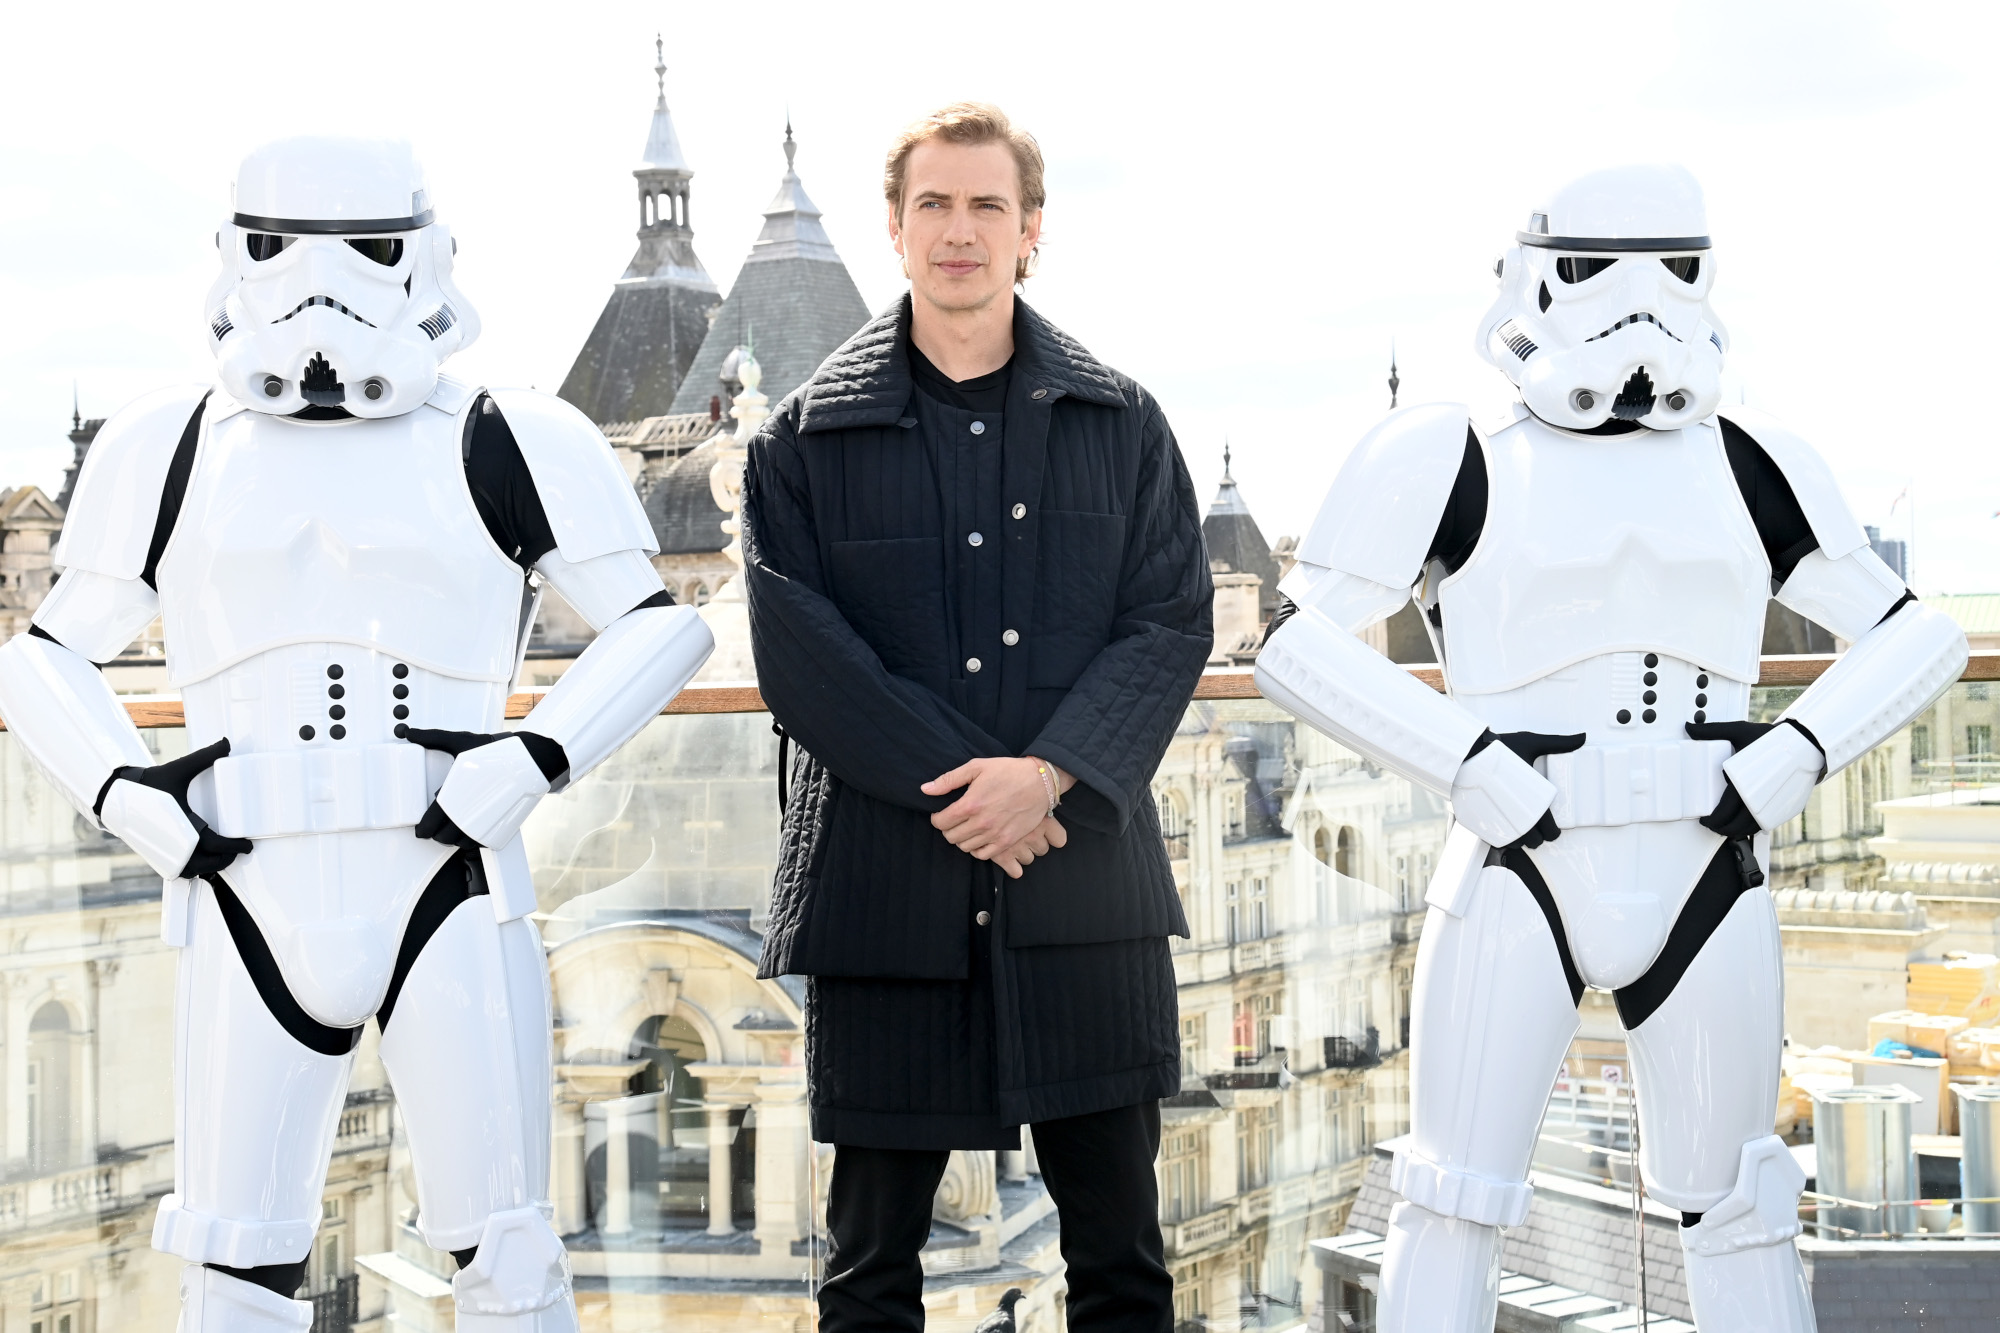 Hayden Christensen at the 'Obi-Wan Kenobi' photocall. He's standing between two Stormtroopers in a long, black jacket.